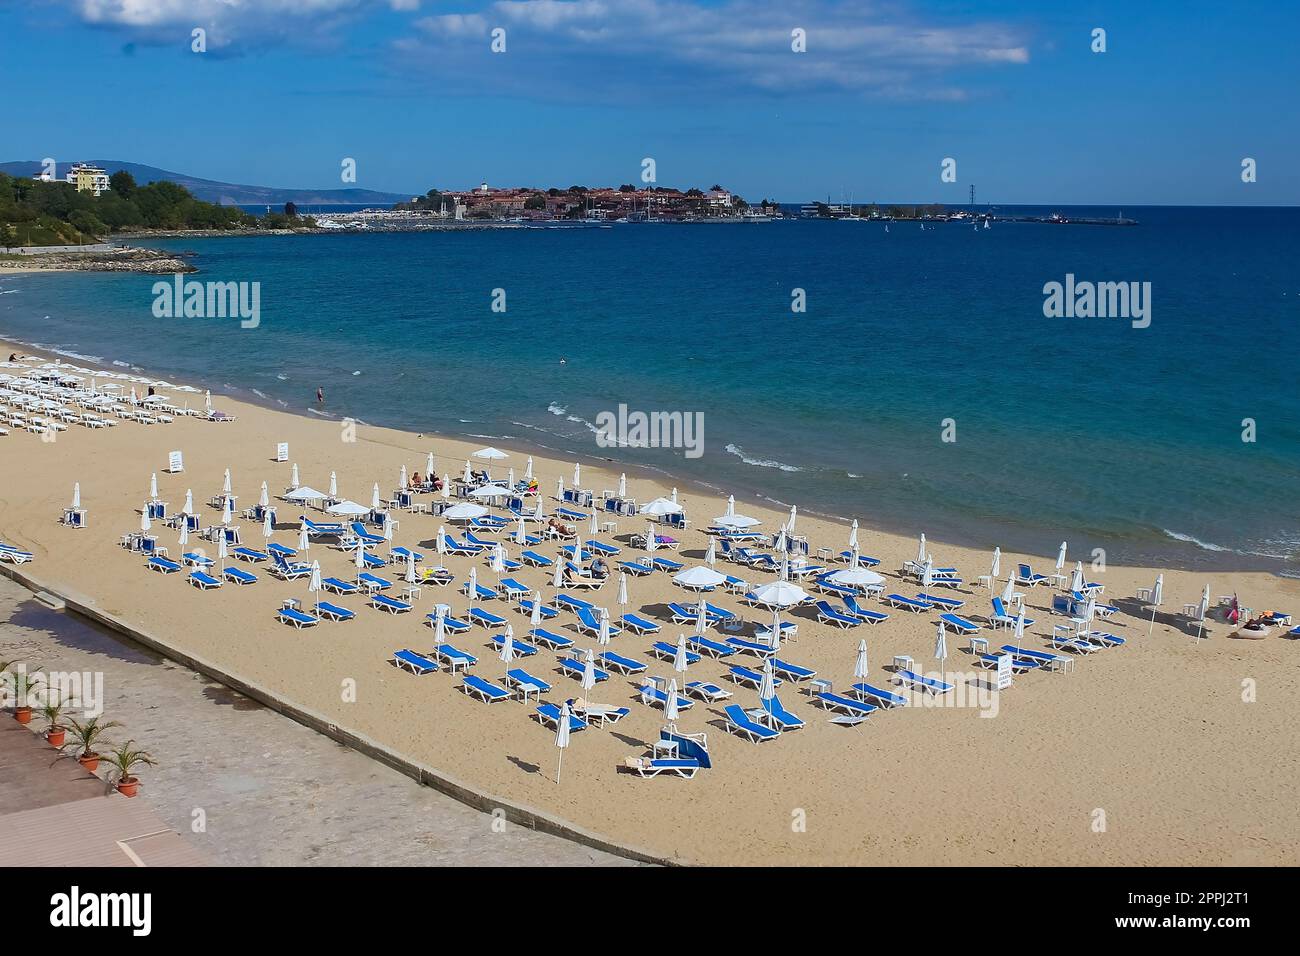 View on sand bay or beach resort at sunny day at Nesebar, Bulgaria Stock Photo